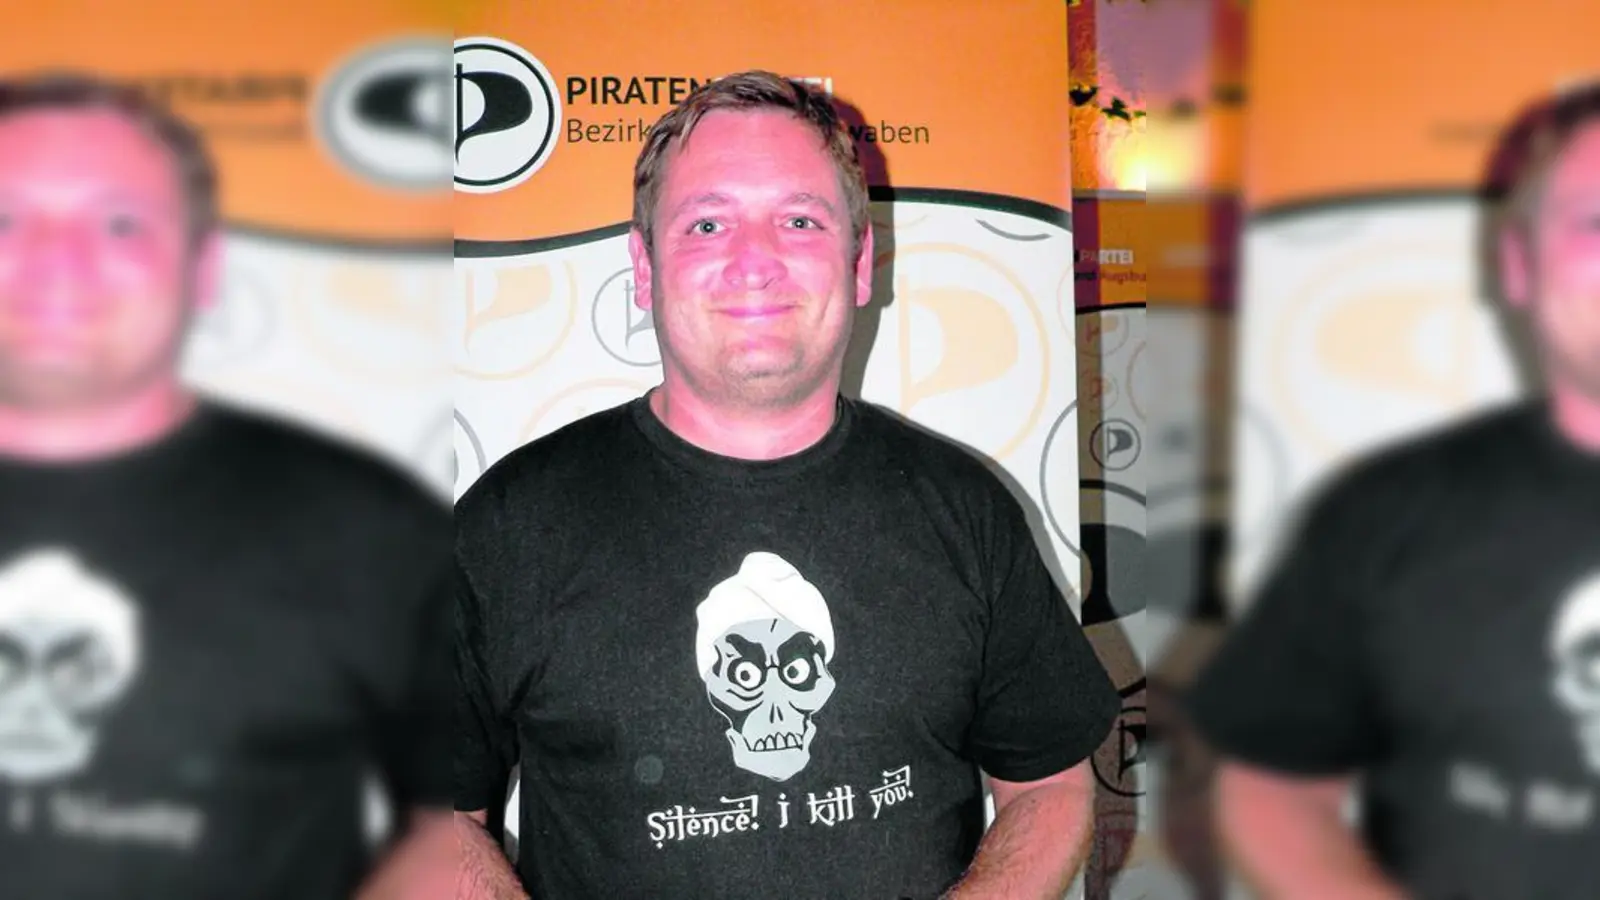 &lt;p&gt;  &lt;x_bildunterschr&gt;  &lt;b&gt;Bezirksvorsitzender &lt;/b&gt; der Piratenpartei: David Krcek.   Foto: Andreas Alt &lt;/x_bildunterschr&gt;  &lt;/p&gt;